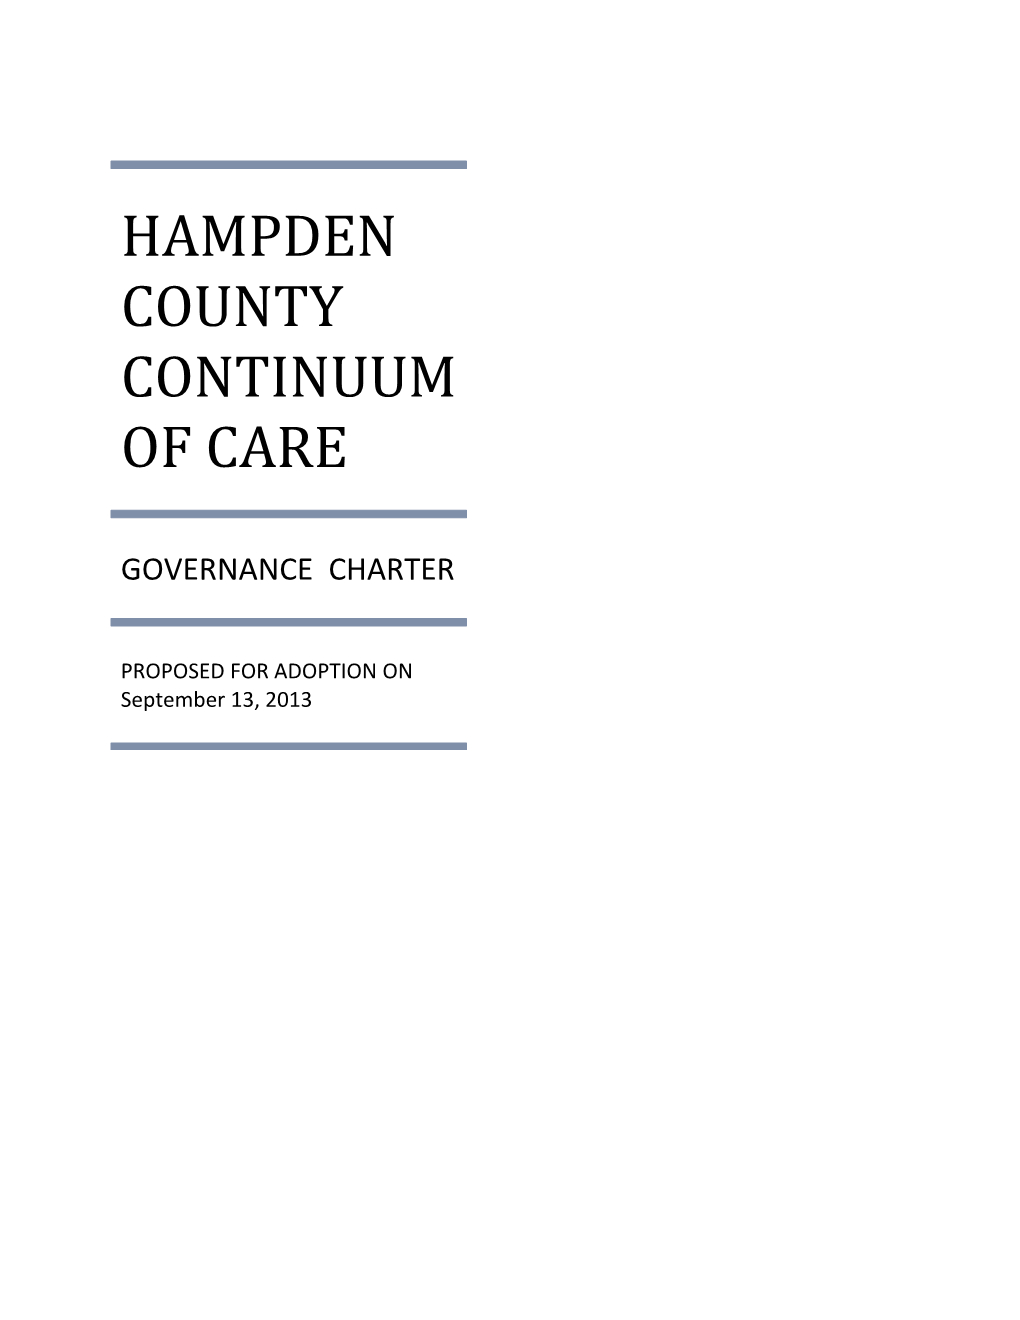 Hampden County Continuum of Care